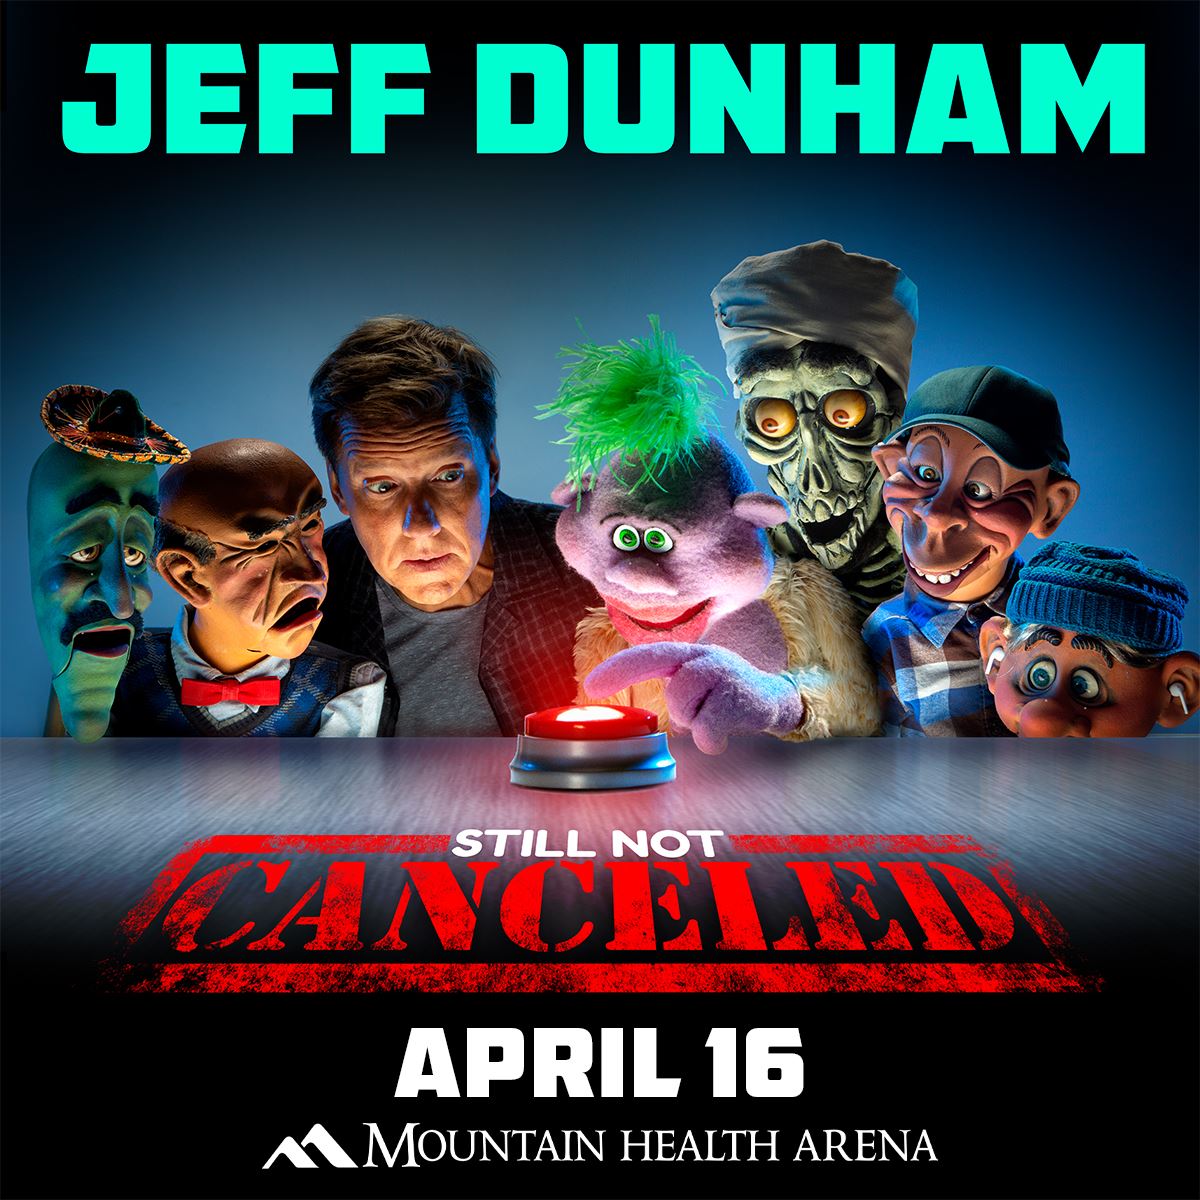 Jeff Dunham Still Not Canceled Tour at the Mountain Health Arena